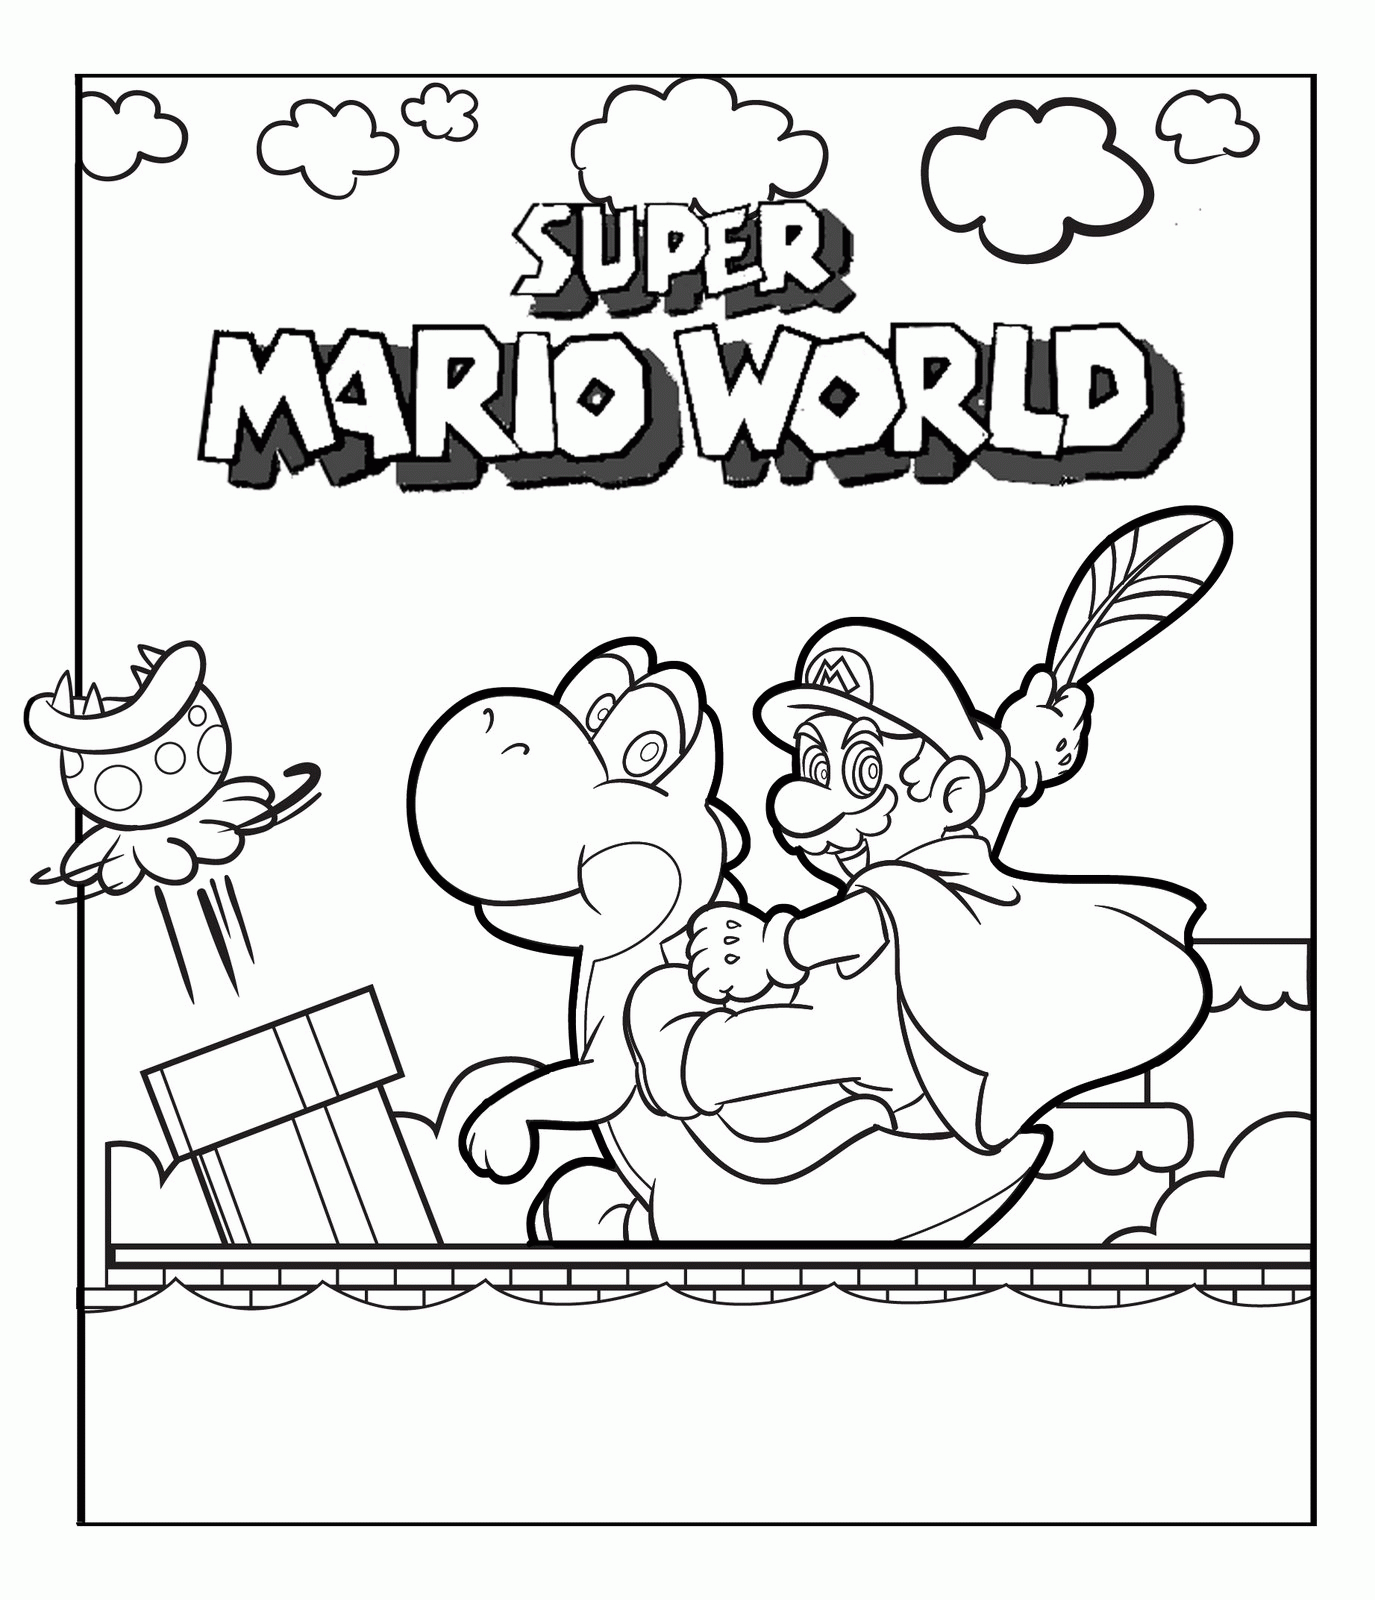 Foto de Super Mario World para imprimir